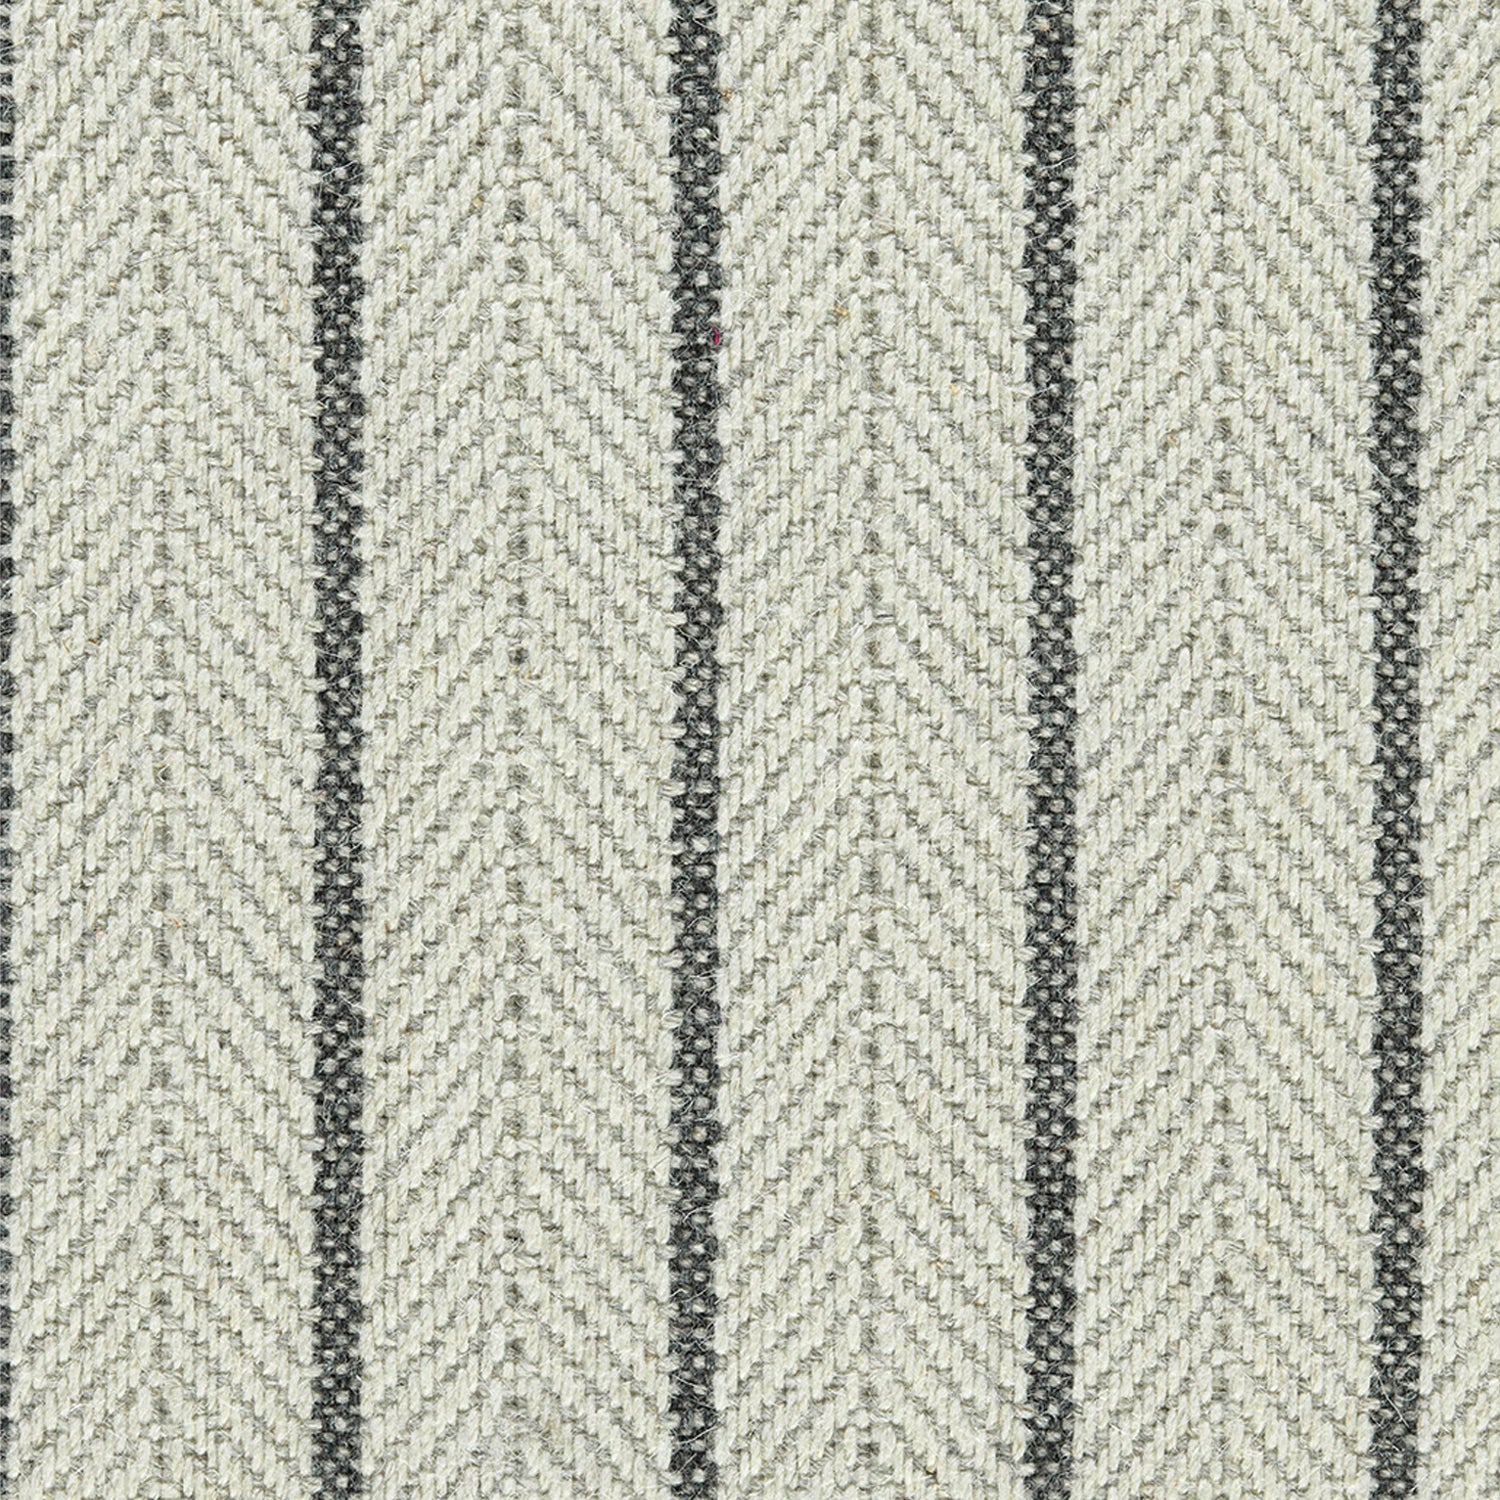 Wool broadloom carpet swatch in a striped herringbone weave in white, gray and charcoal.